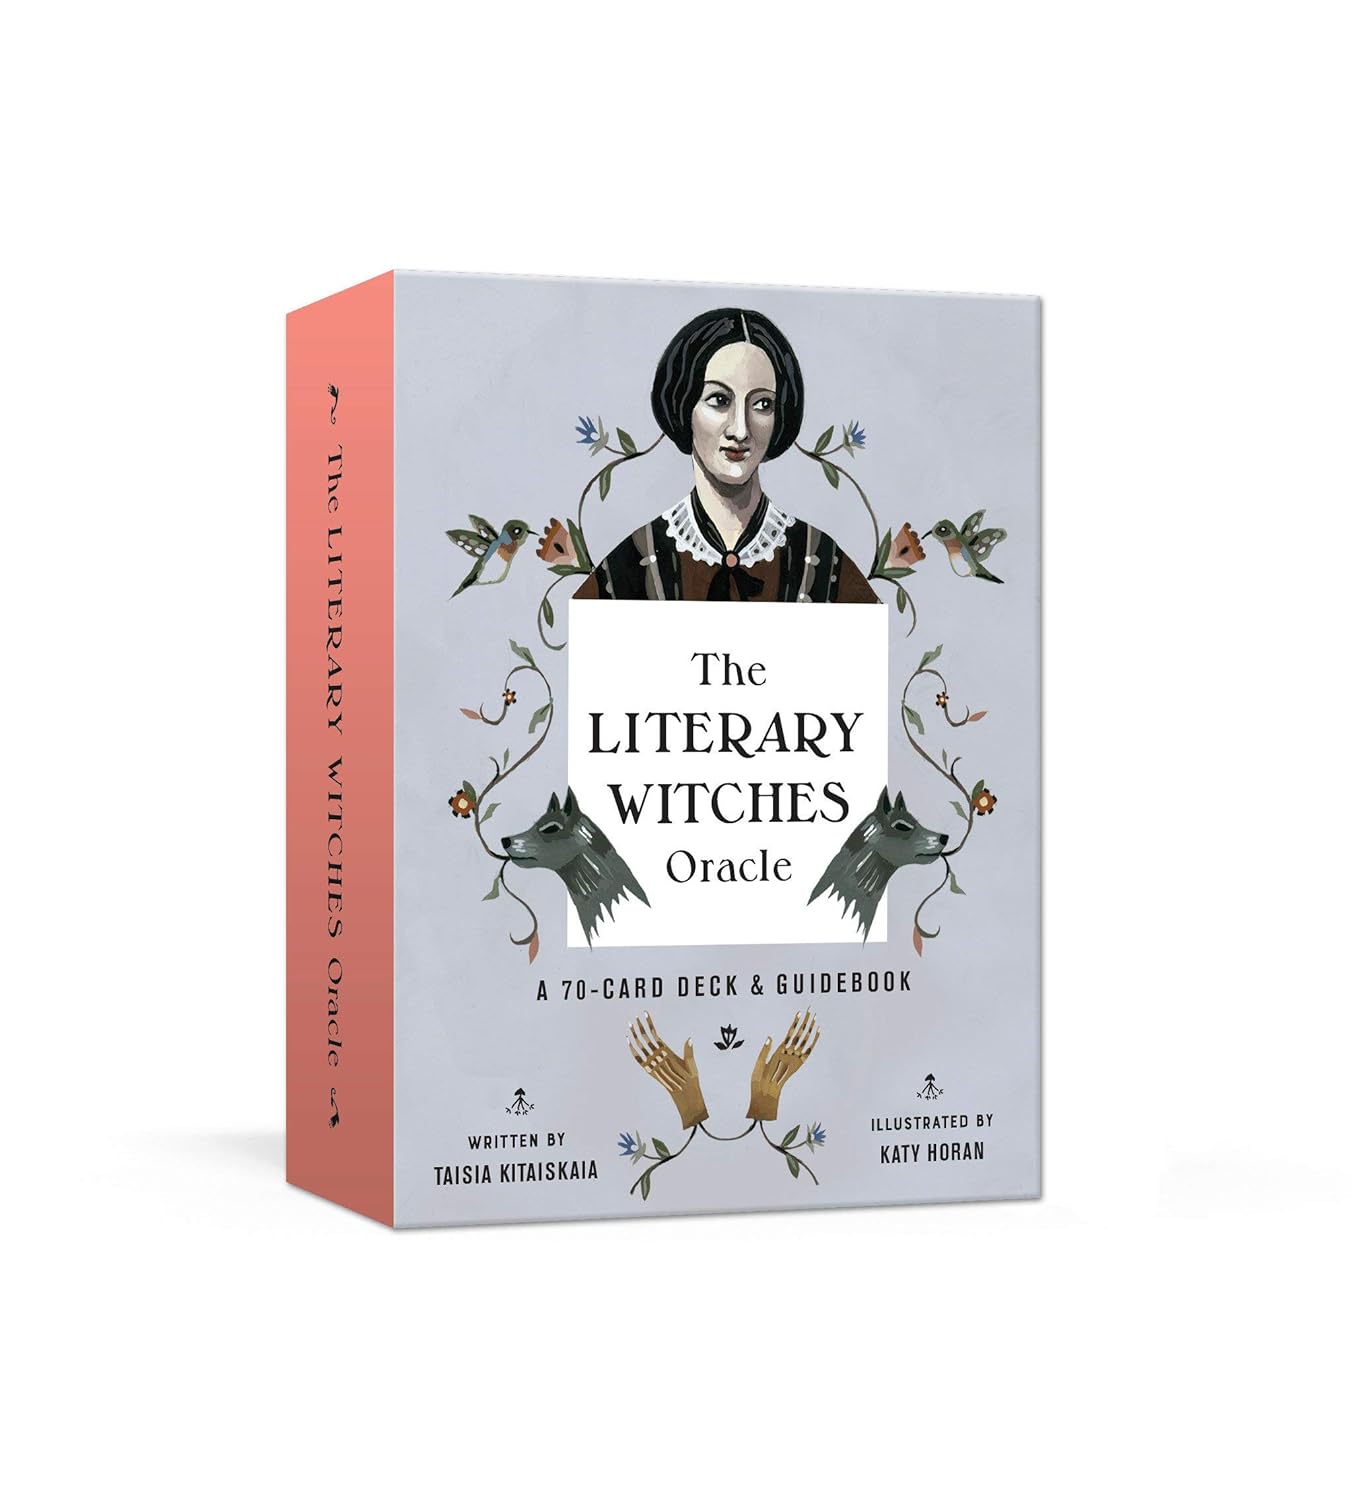 The Literary Witches Oracle by Taisia Kitaiskaia & Katy Horan